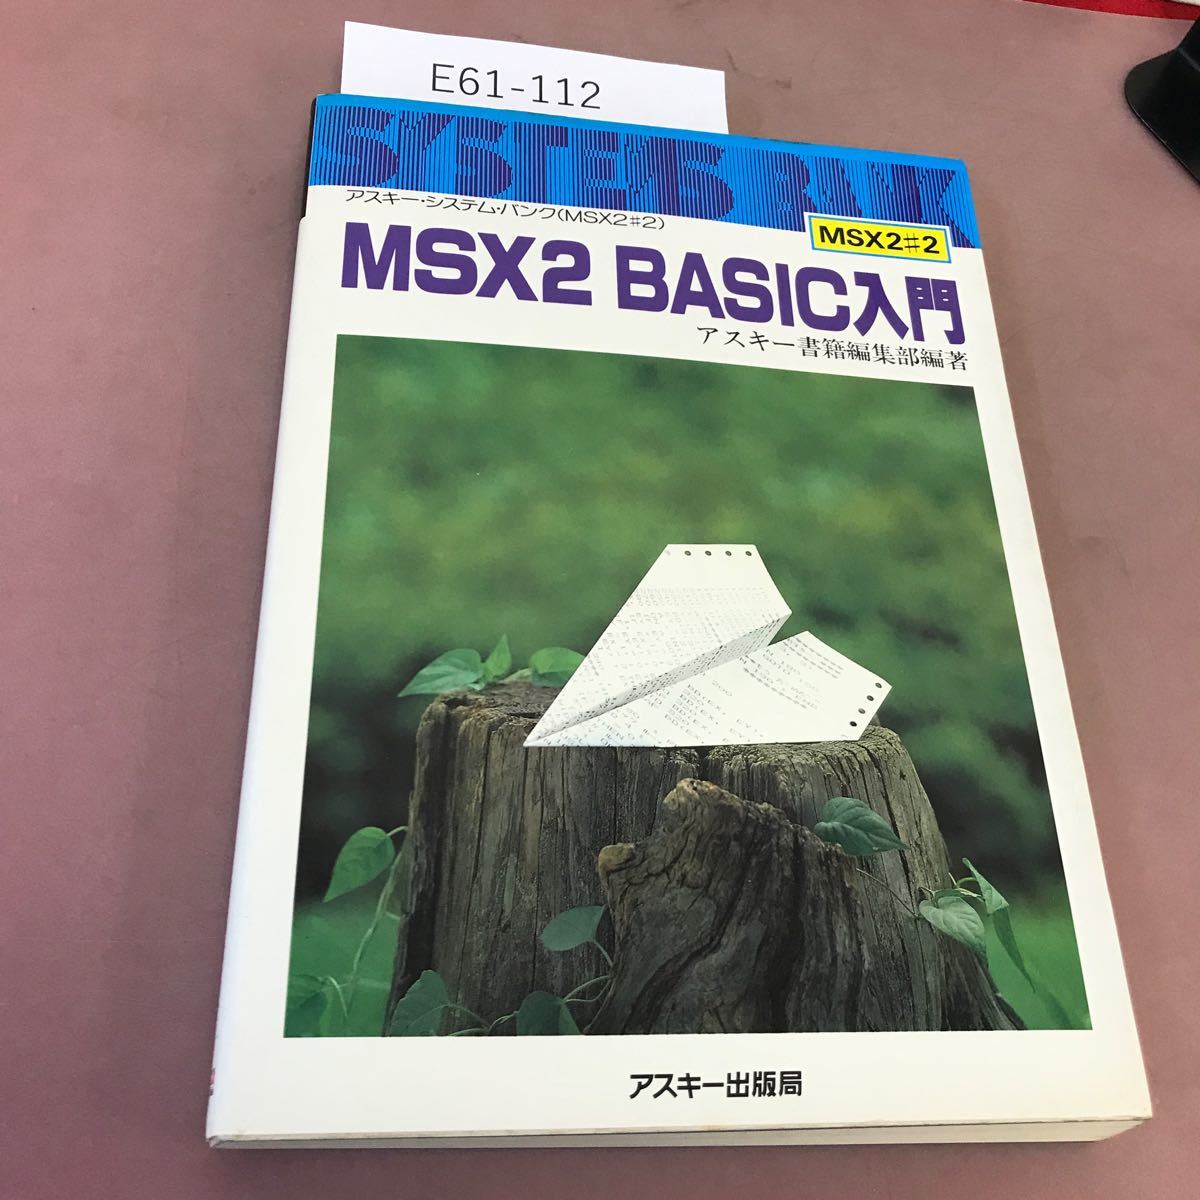 E61-112 ASCII * system * Bank MSX2 BASIC introduction ASCII publish department MSX2#2